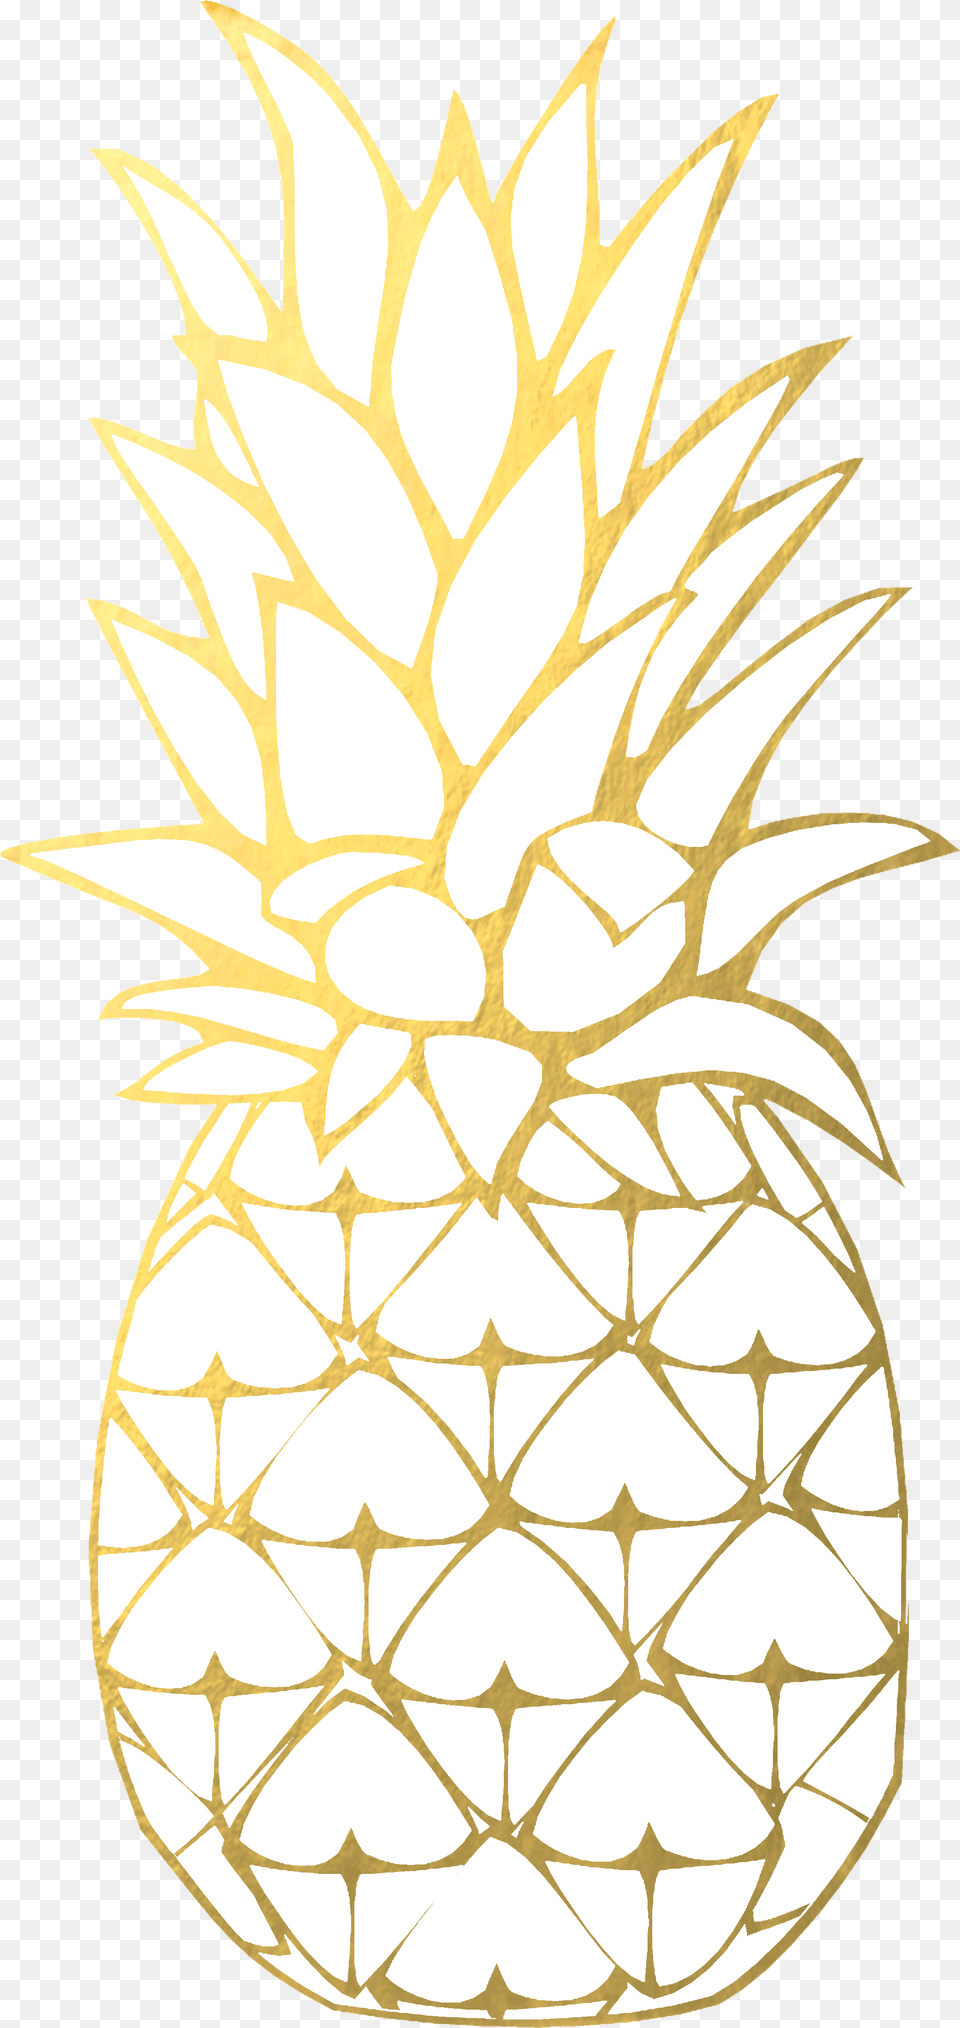 Gold Pineapple Transparent Background, Food, Fruit, Plant, Produce Png Image